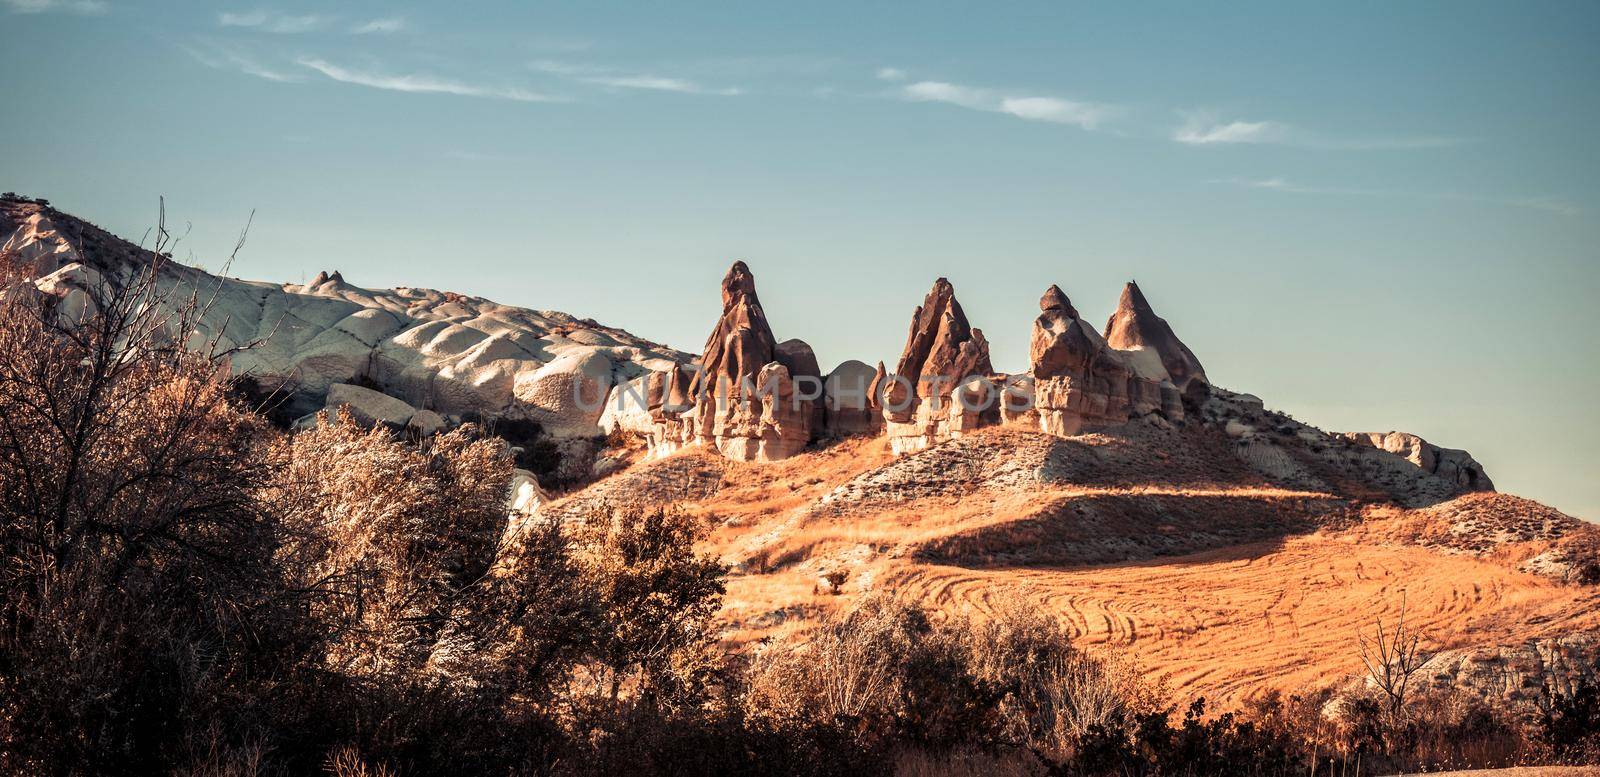 Unusual rocky mountains in Cappadocia, Turkey by GekaSkr